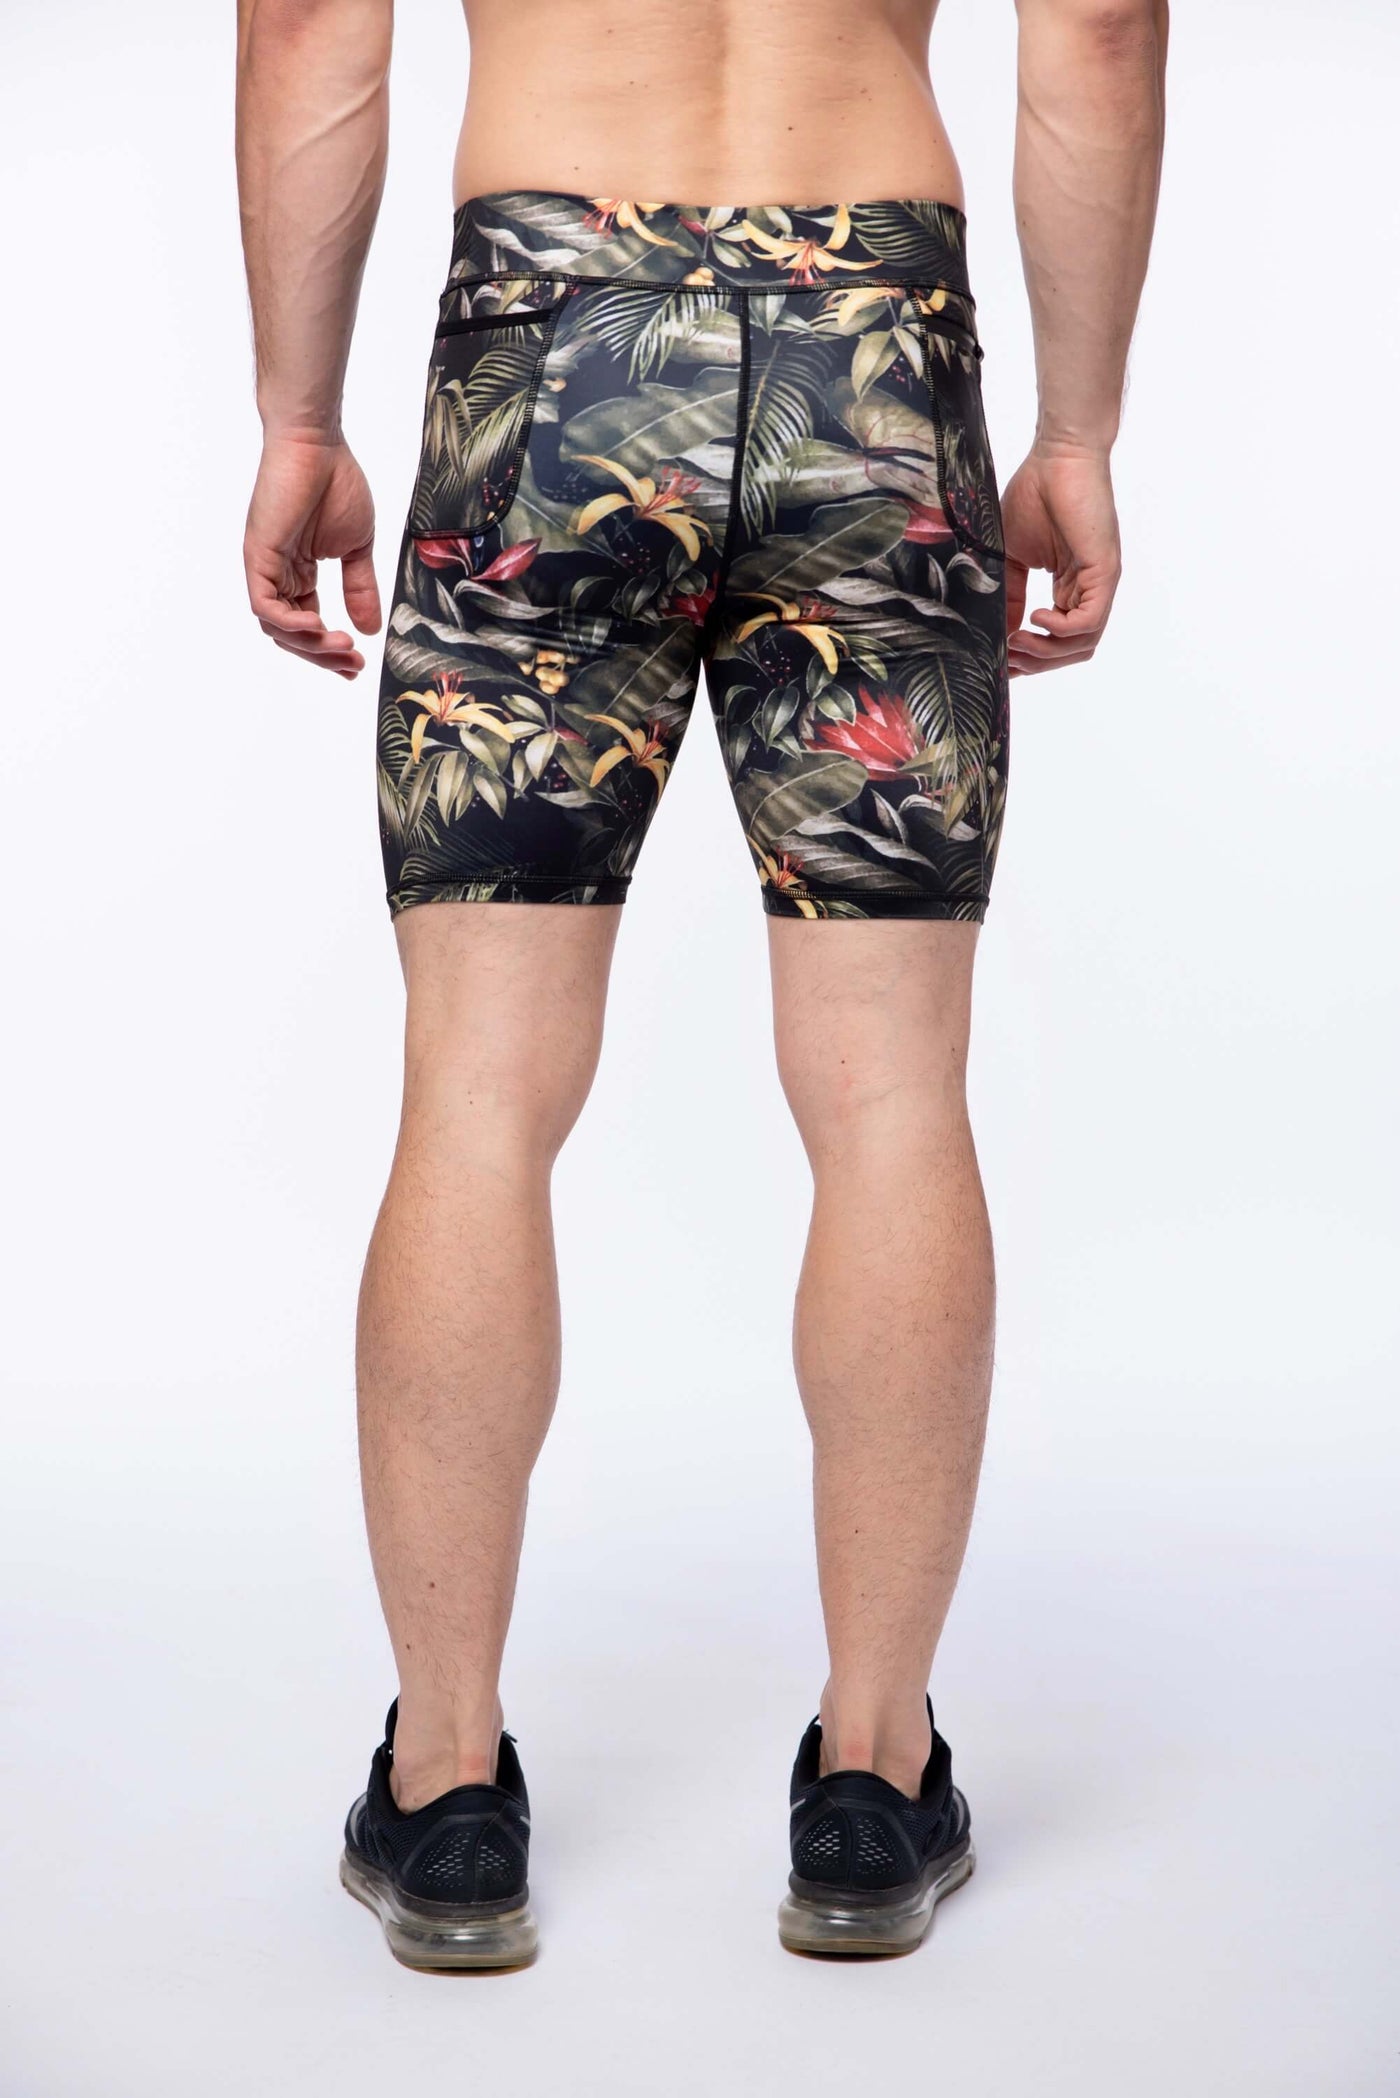 Tarzan Compression Shorts - Kapow Meggings